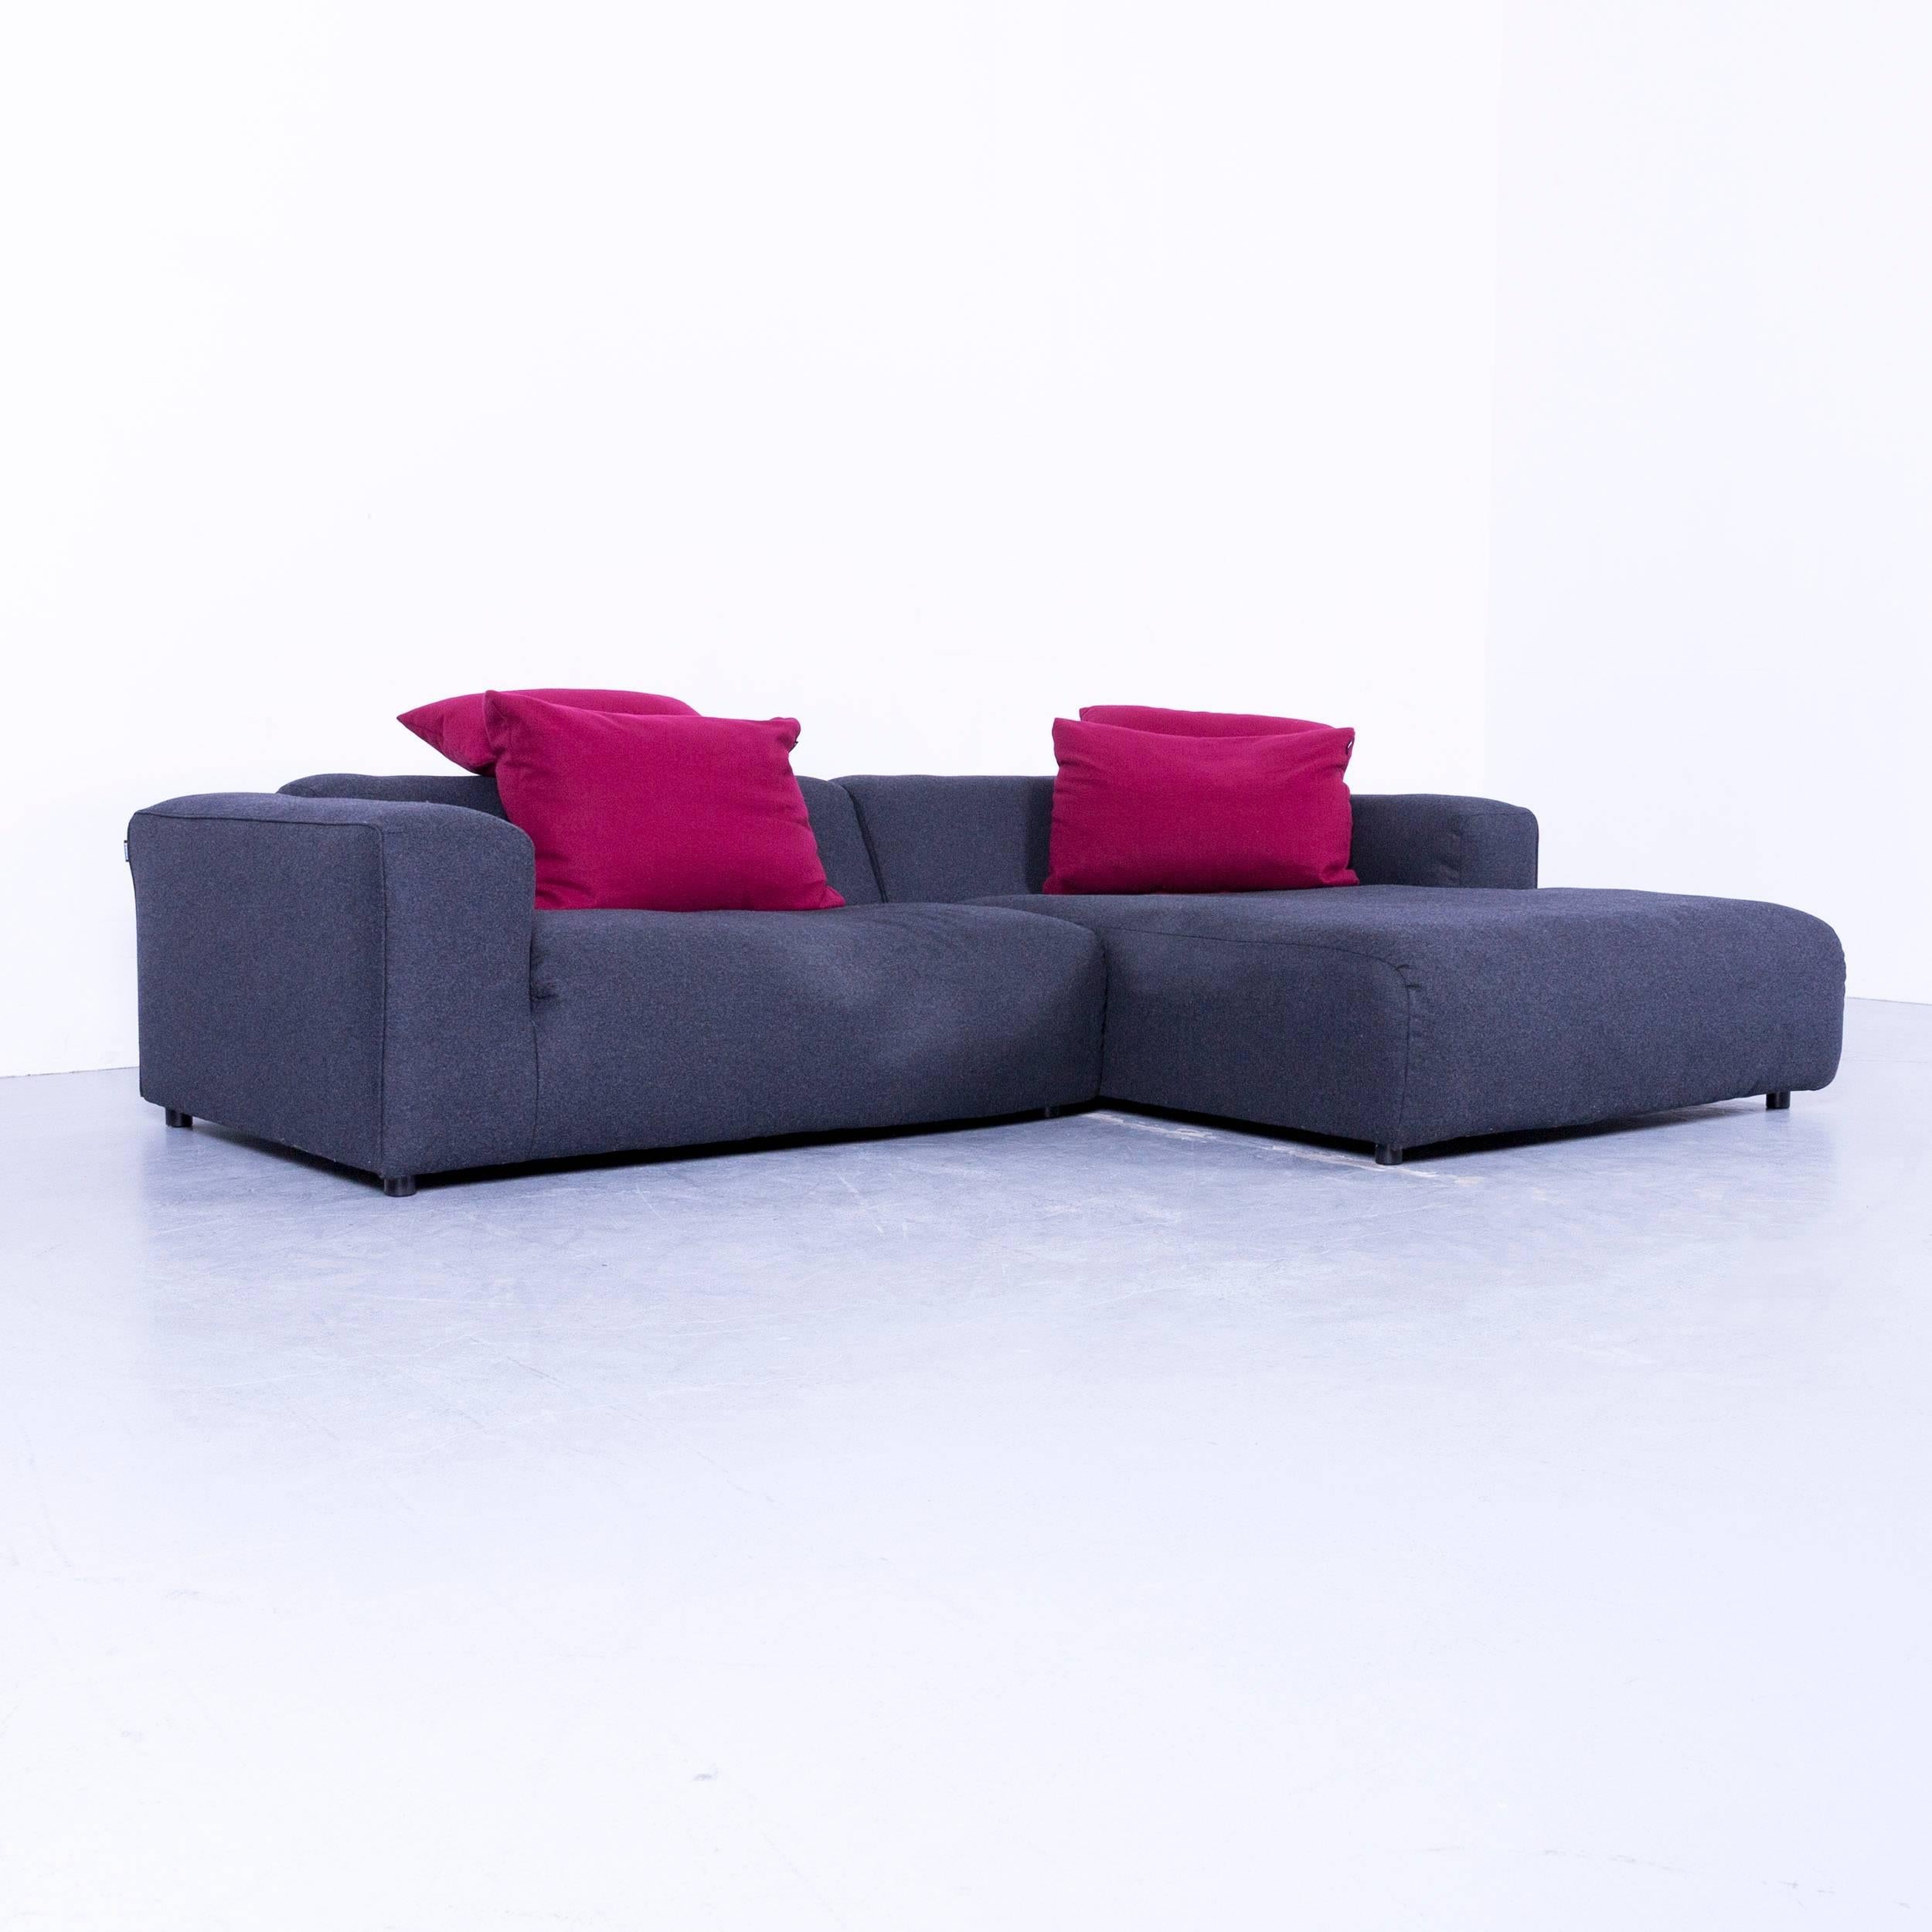 An Rolf Benz designer corner sofa set fabric grey couch modern.